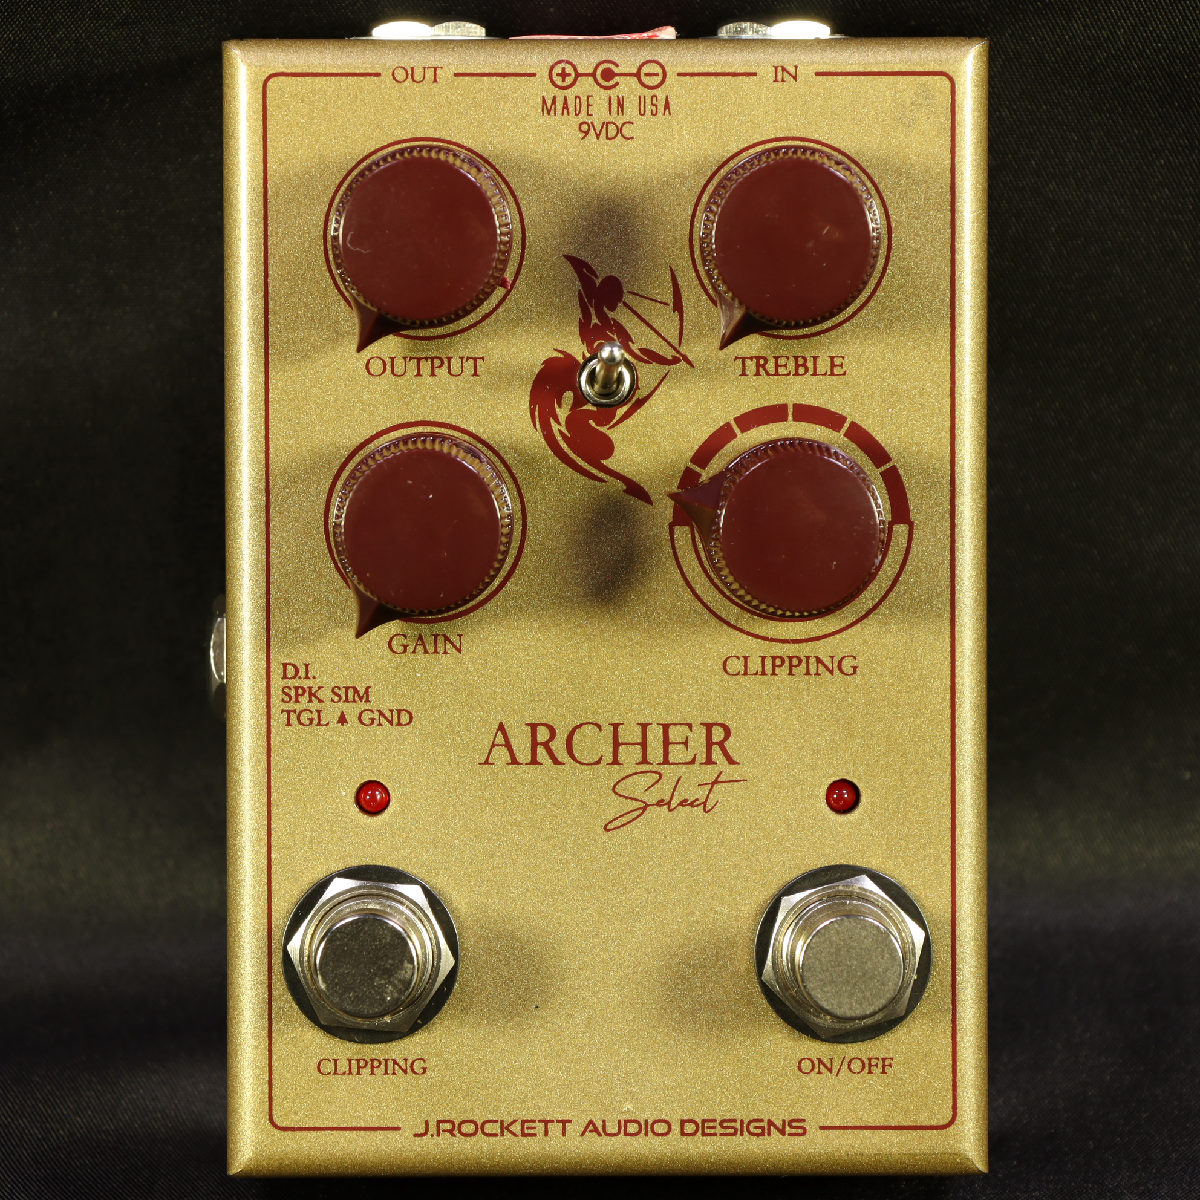 J. Rockett Audio Designs / Archer Select オーバードライブ ジェイ